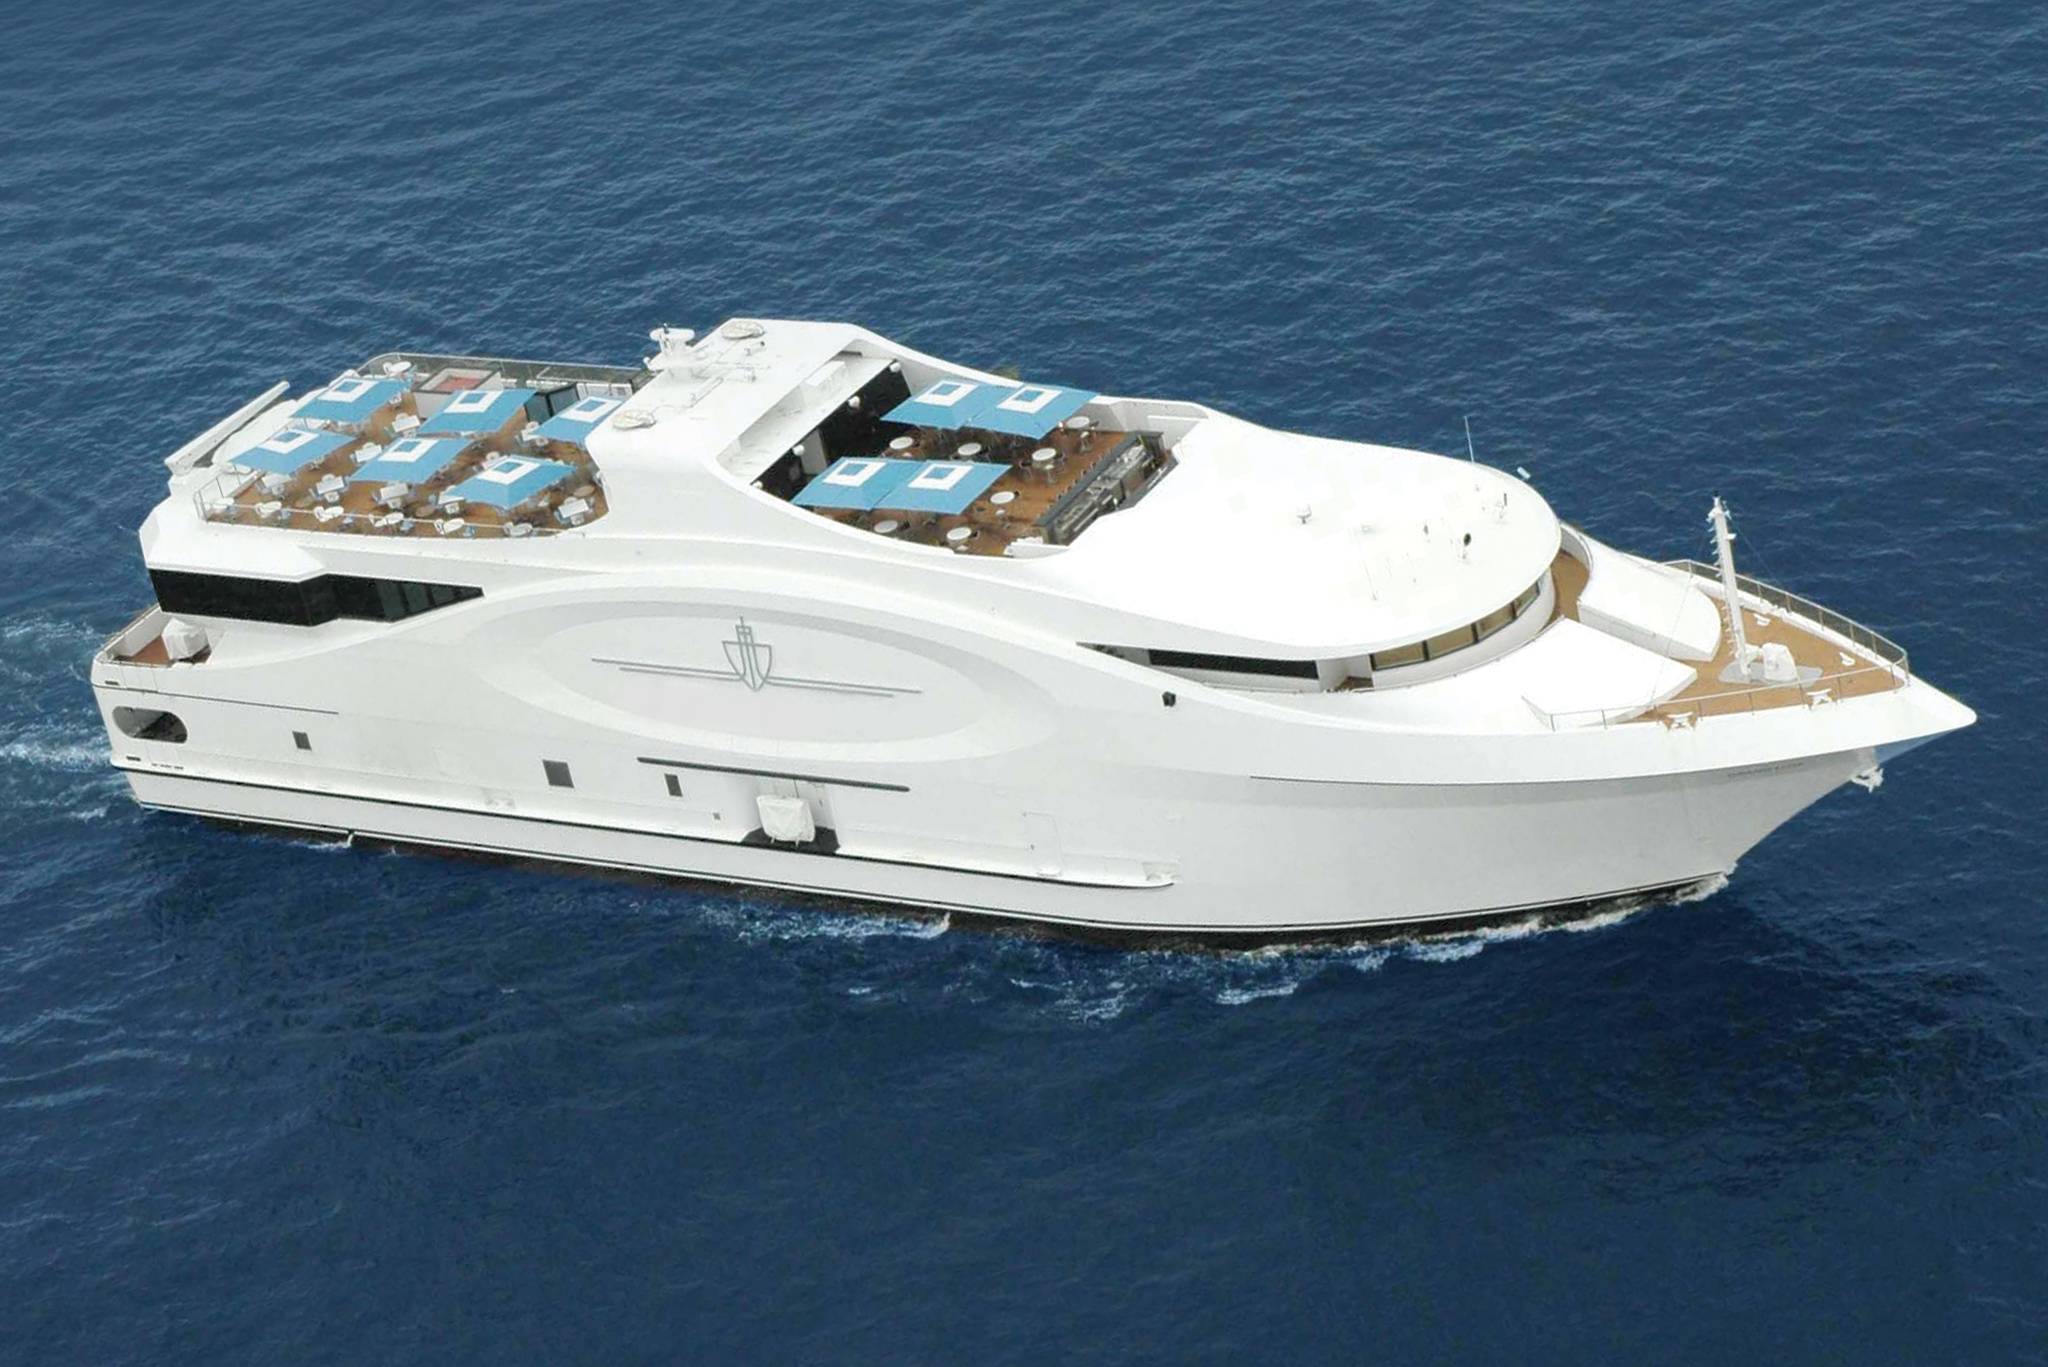 seafair mega yacht reviews